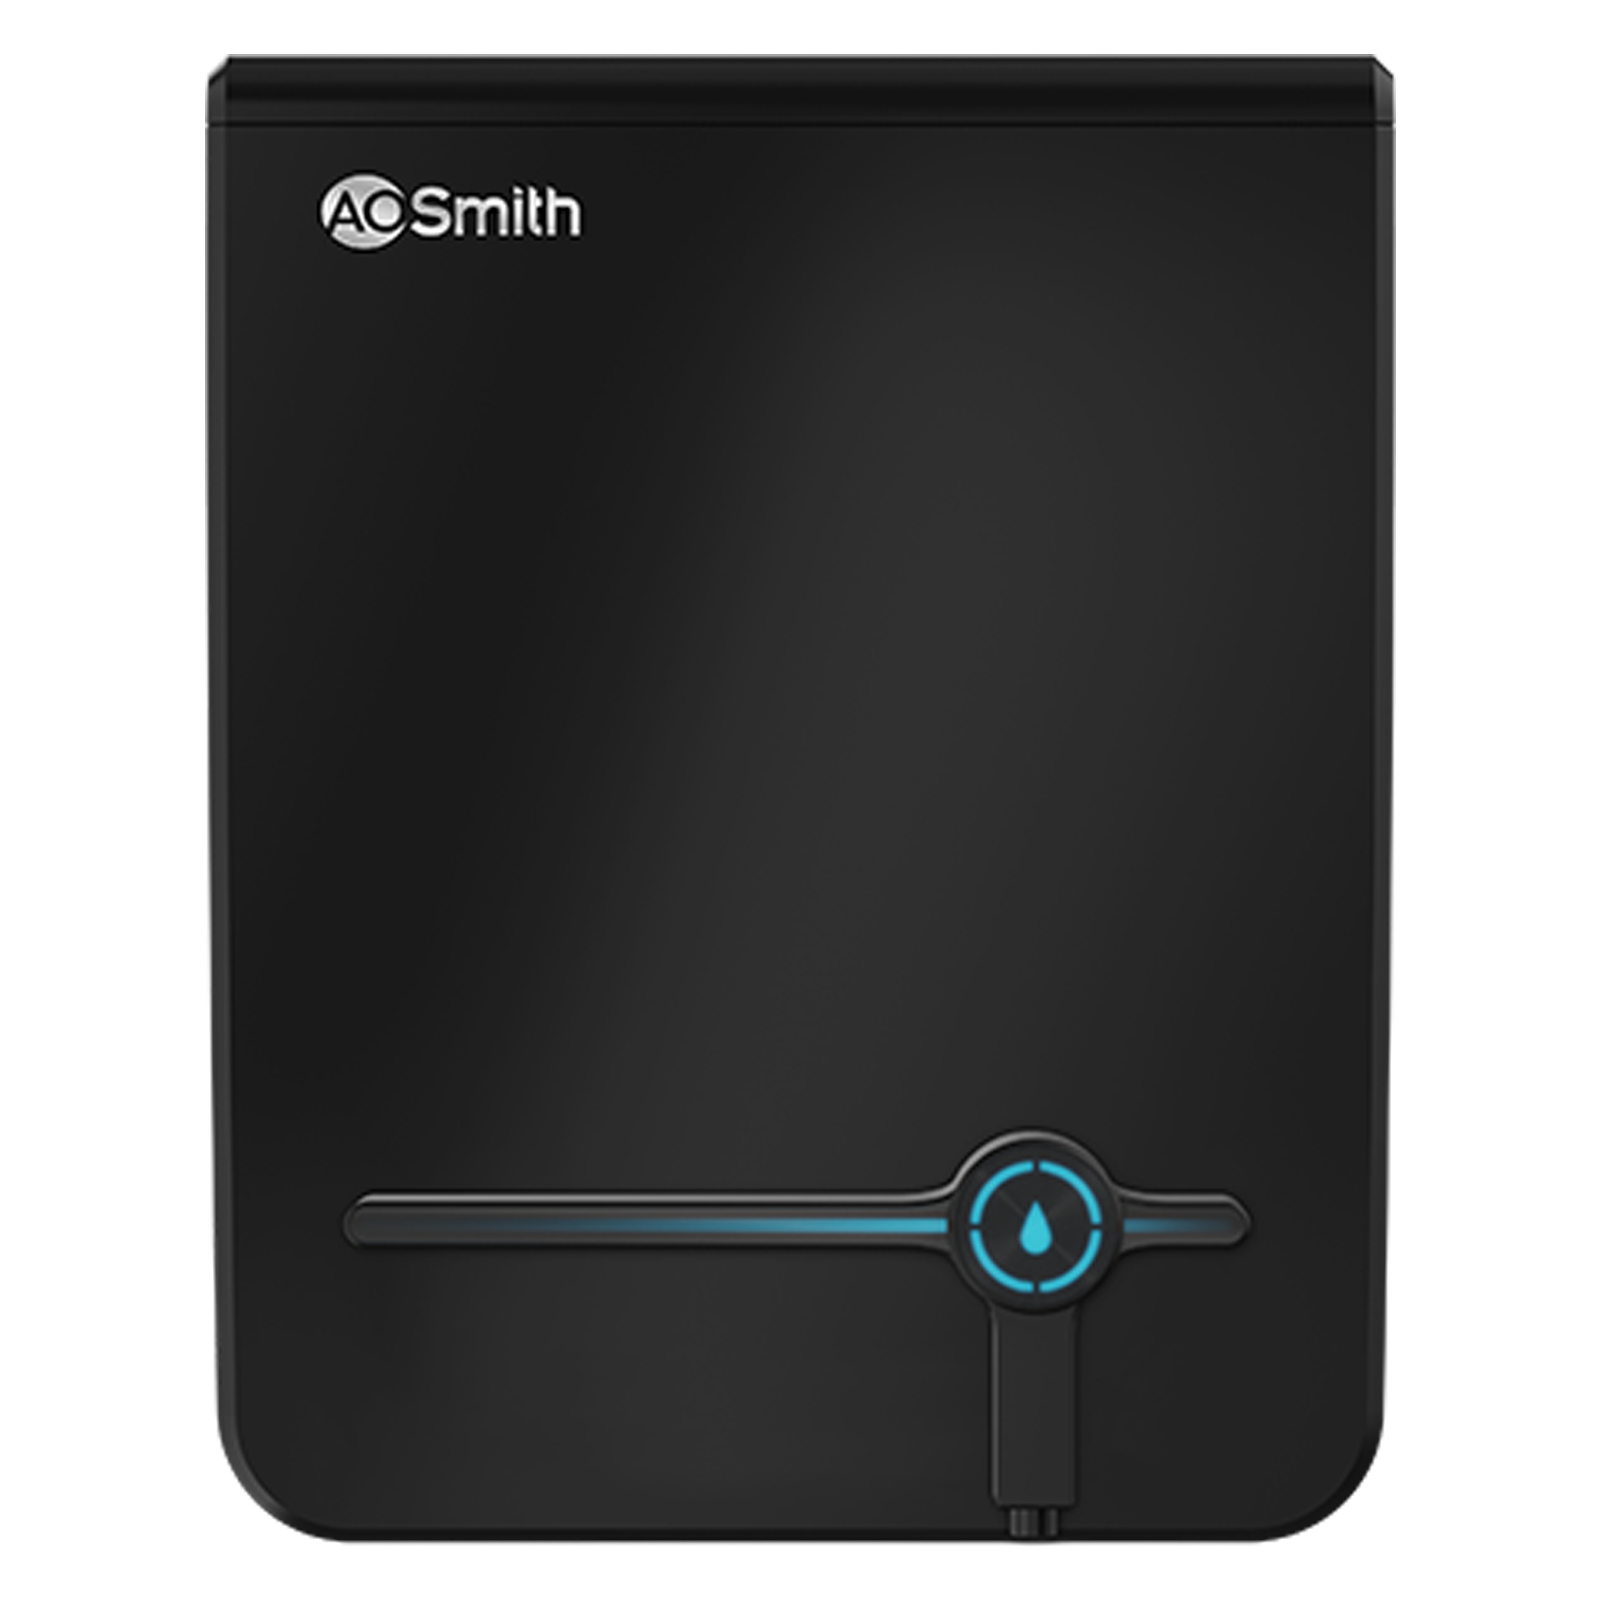 AO Smith Intelli UV SAPC + TDS Electrical Water Purifier (Advanced Digital Display with Touch Dispensing, IUV190051RIBNN5, Black) _1